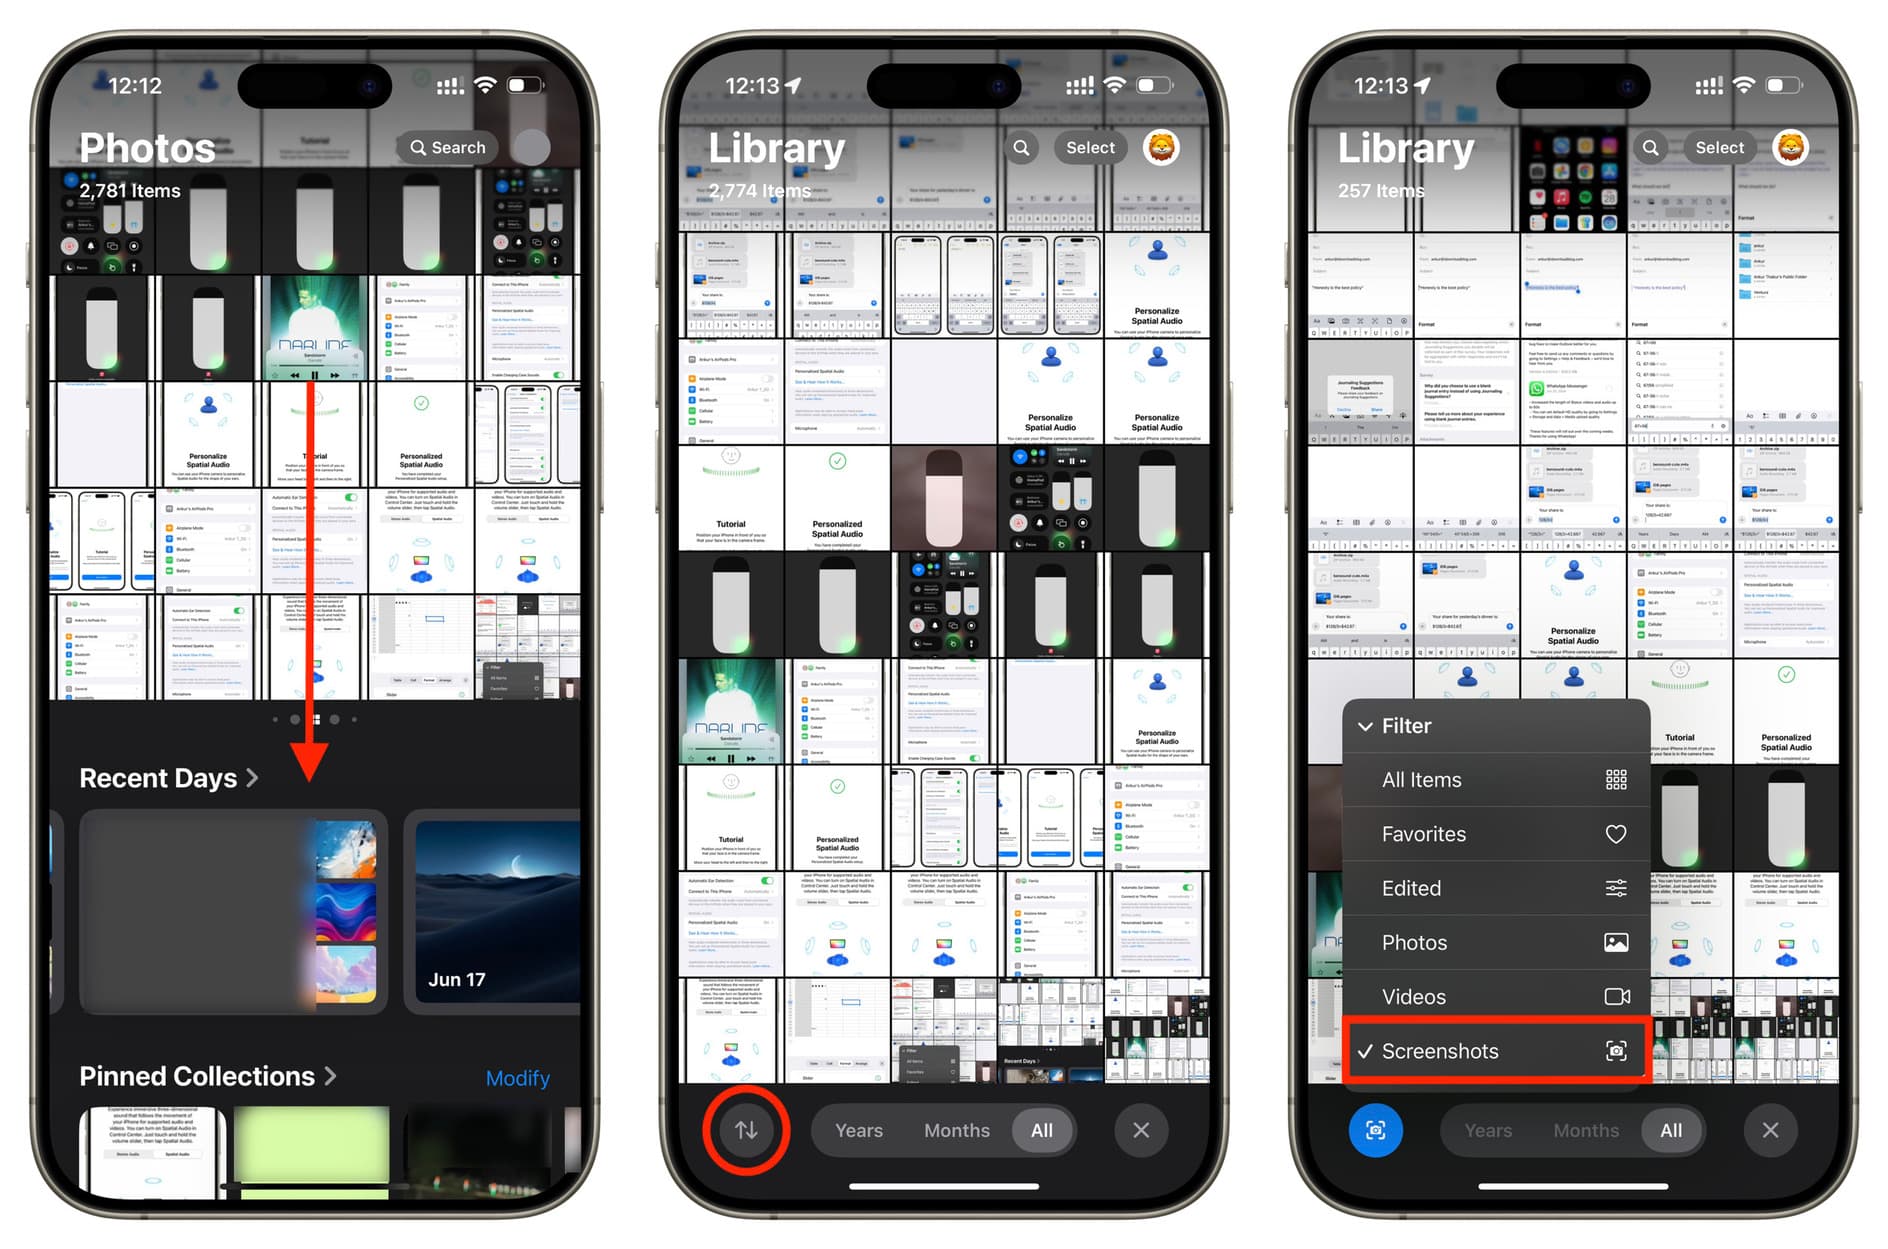 Use Screenshots filter in iPhone Photos app